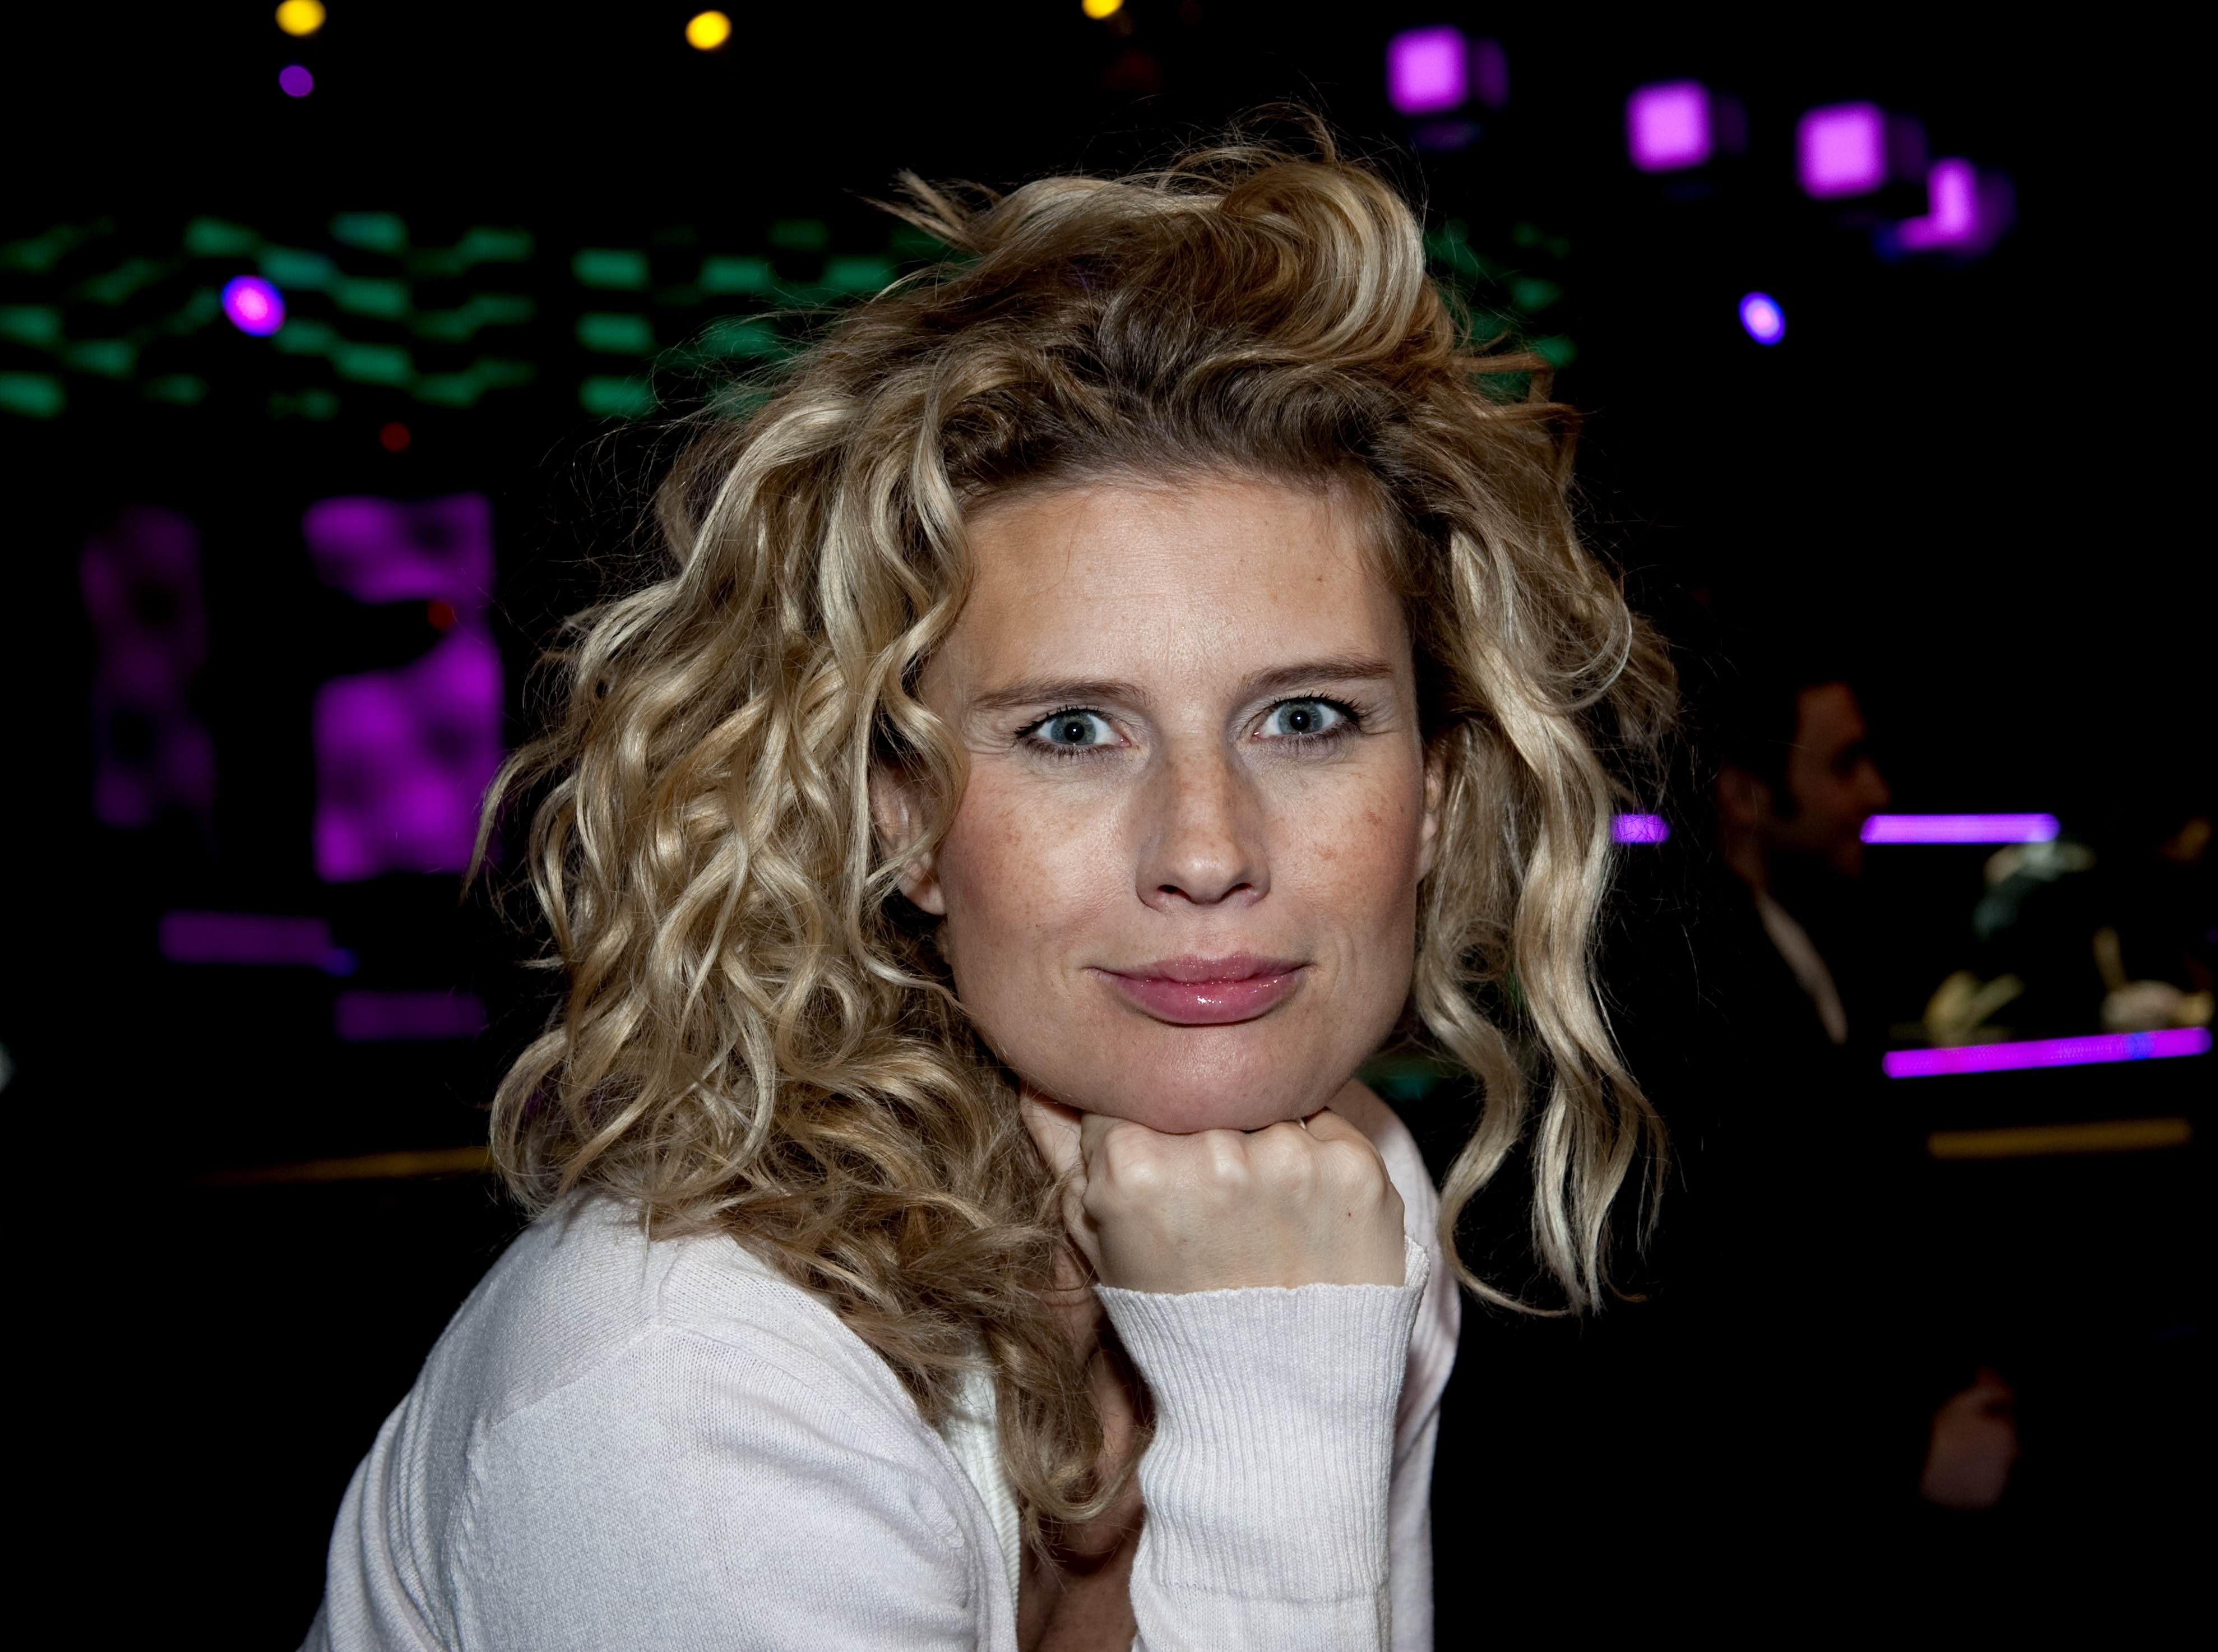 Eurovision Song Contest 2010, Anna Bergendahl, Melodifestivalen 2010, Christine Meltzer